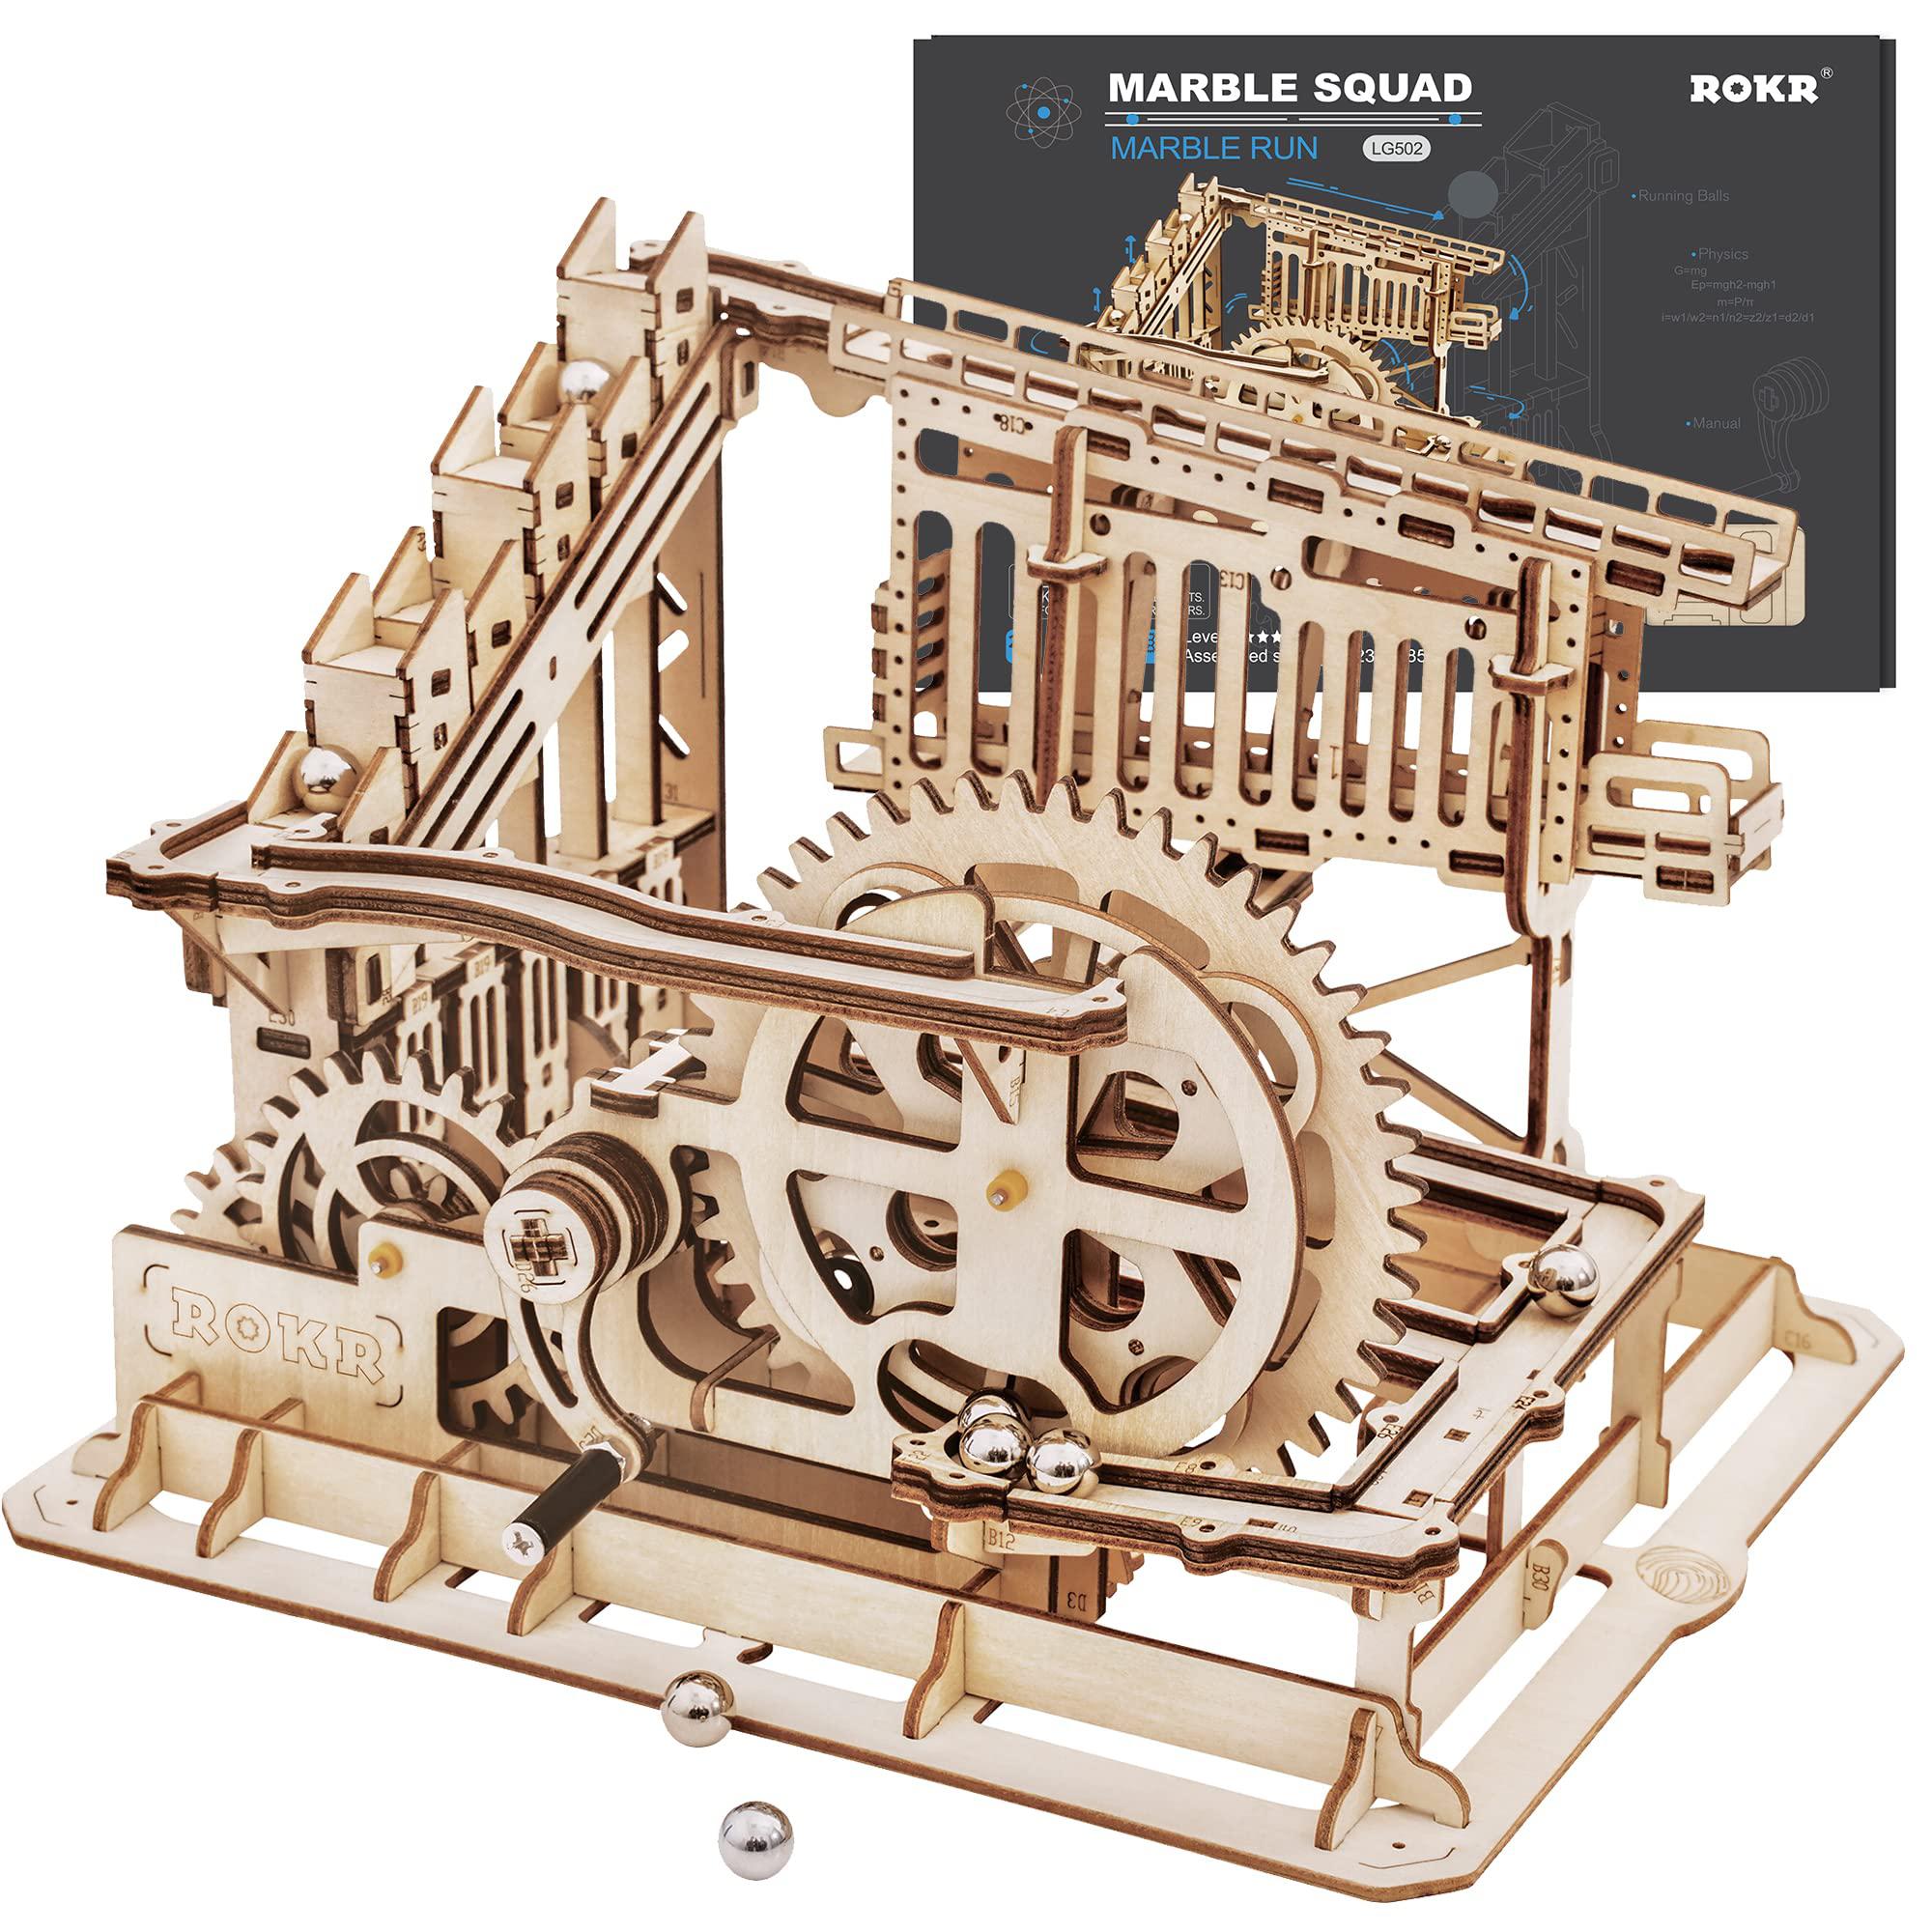 rokr 3d wooden puzzle mechanical gears set diy assembly model kits wooden craft kits brain teaser games building set best chr